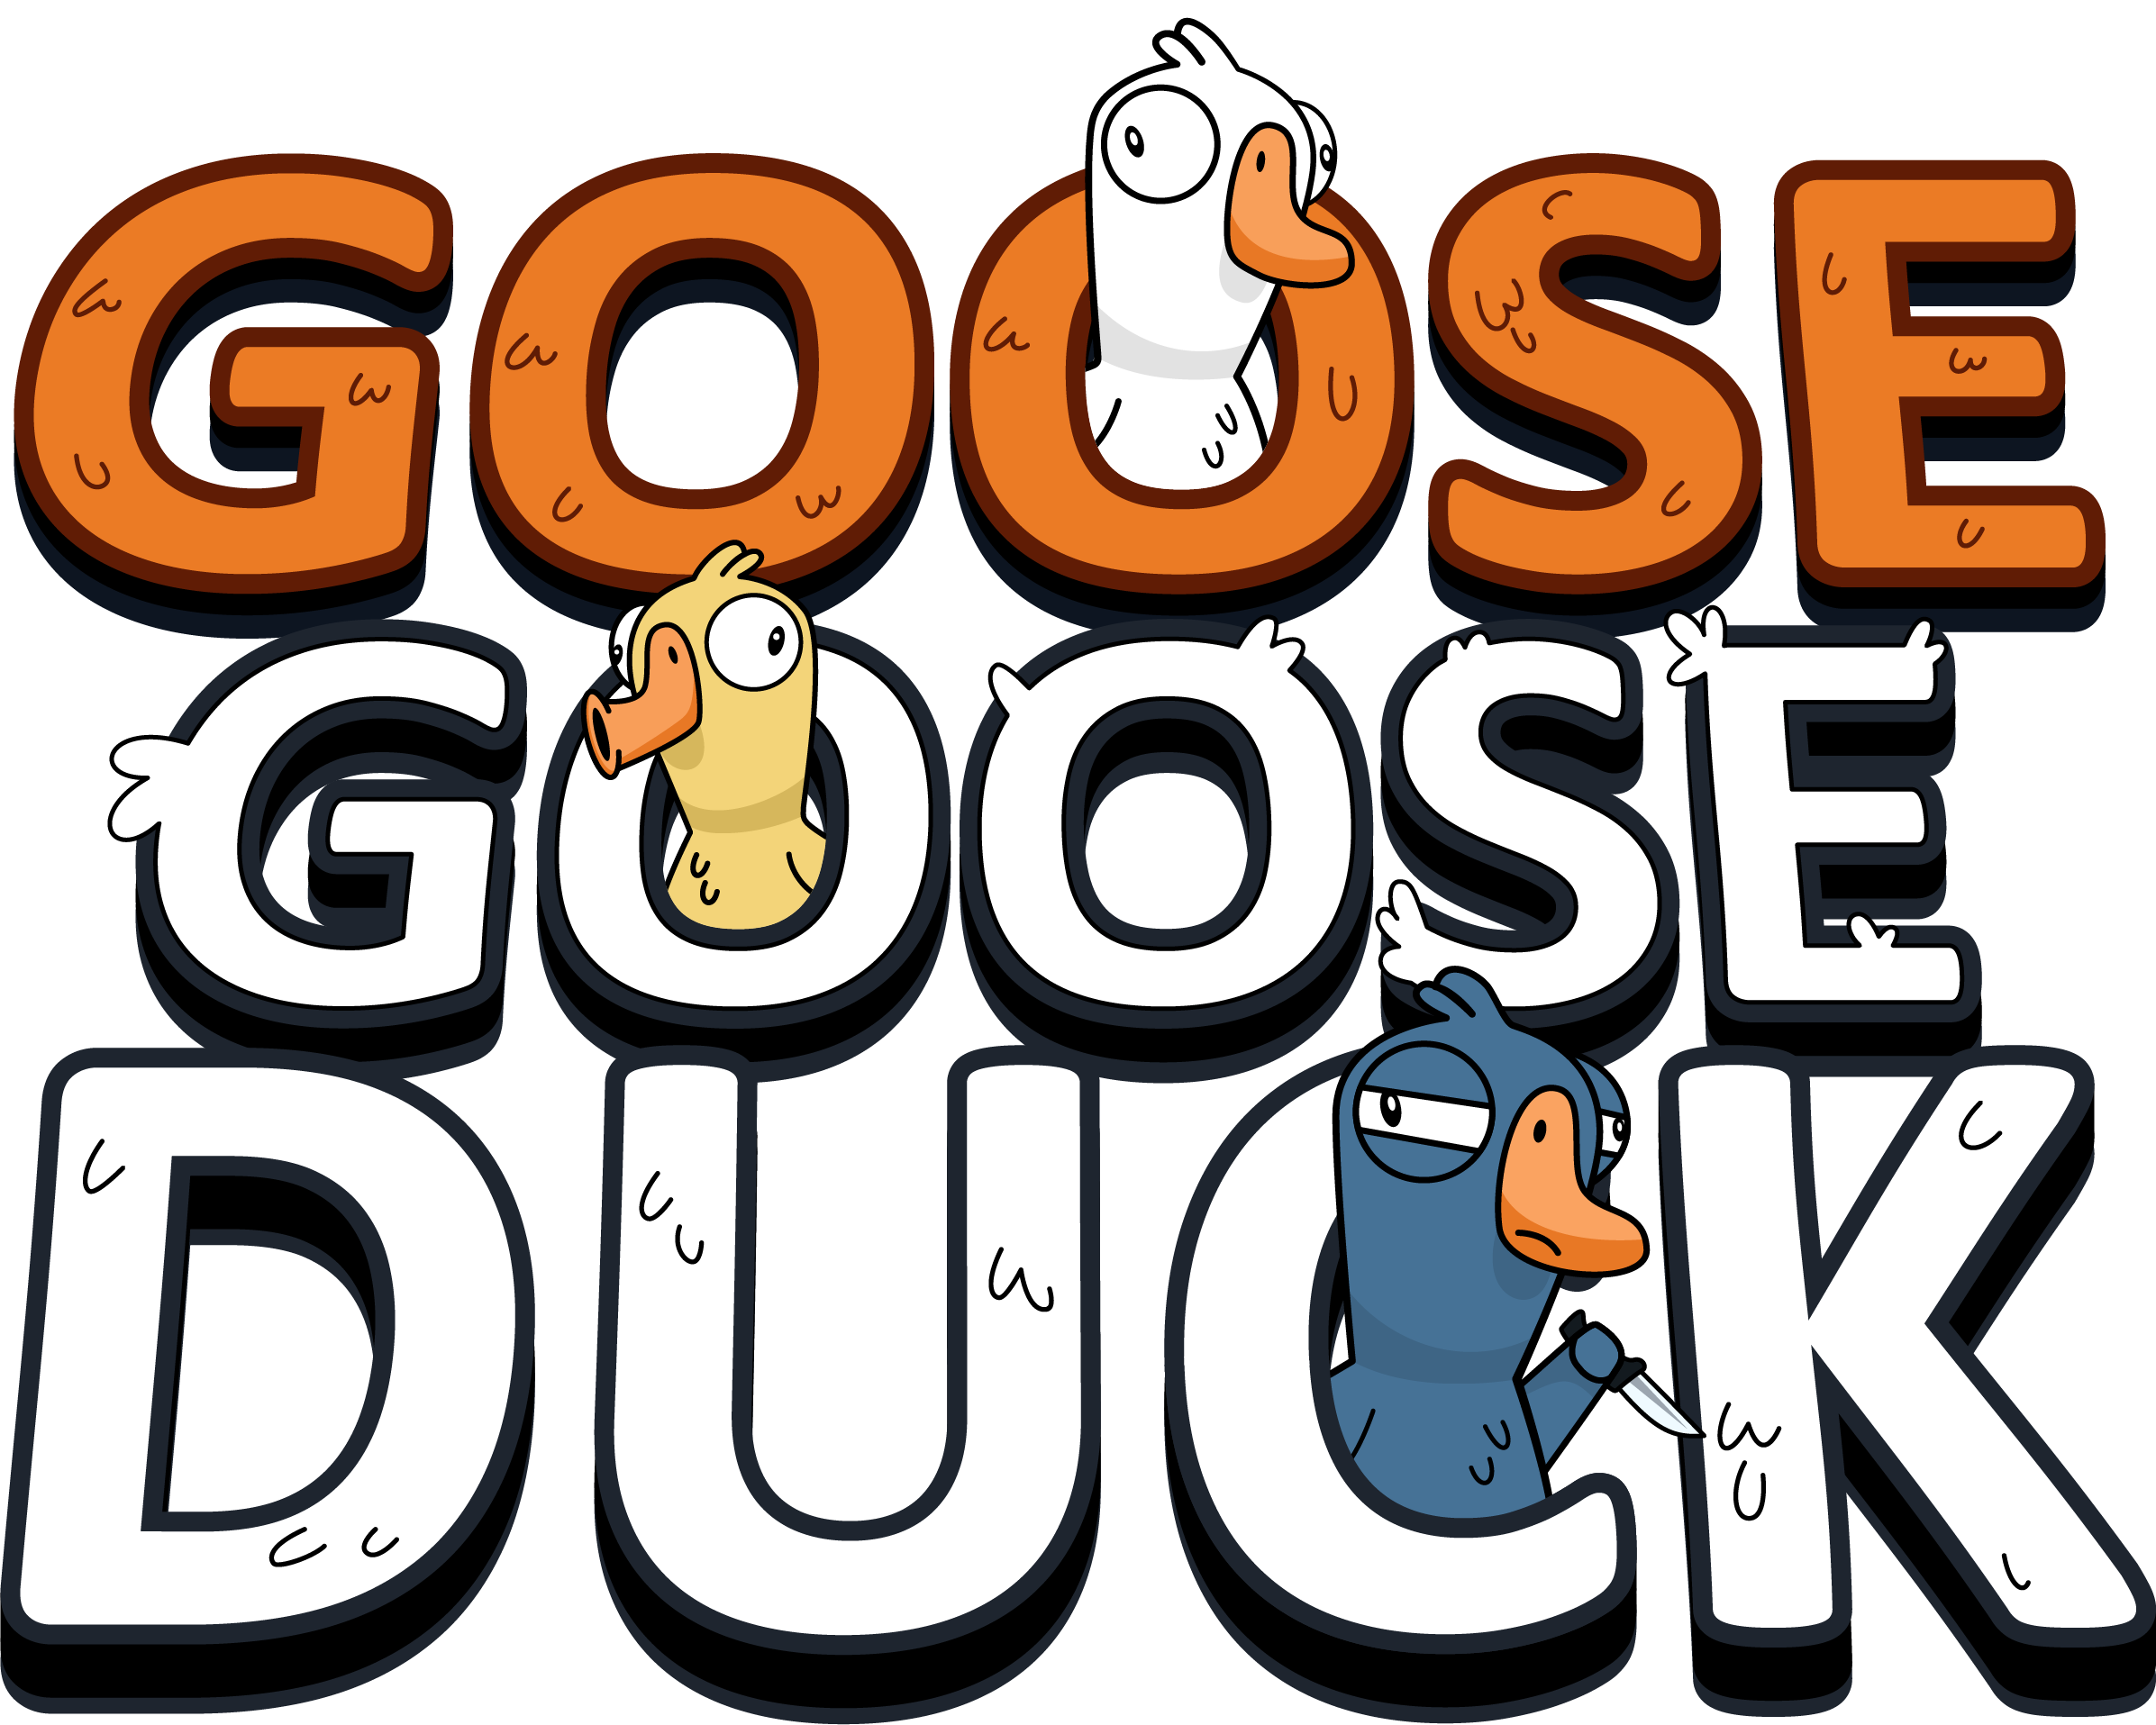 Гусь гусь даг. Гусь Гус дак. Geese логотип. Гусь дак игра. Goose Goose Duck логотип.